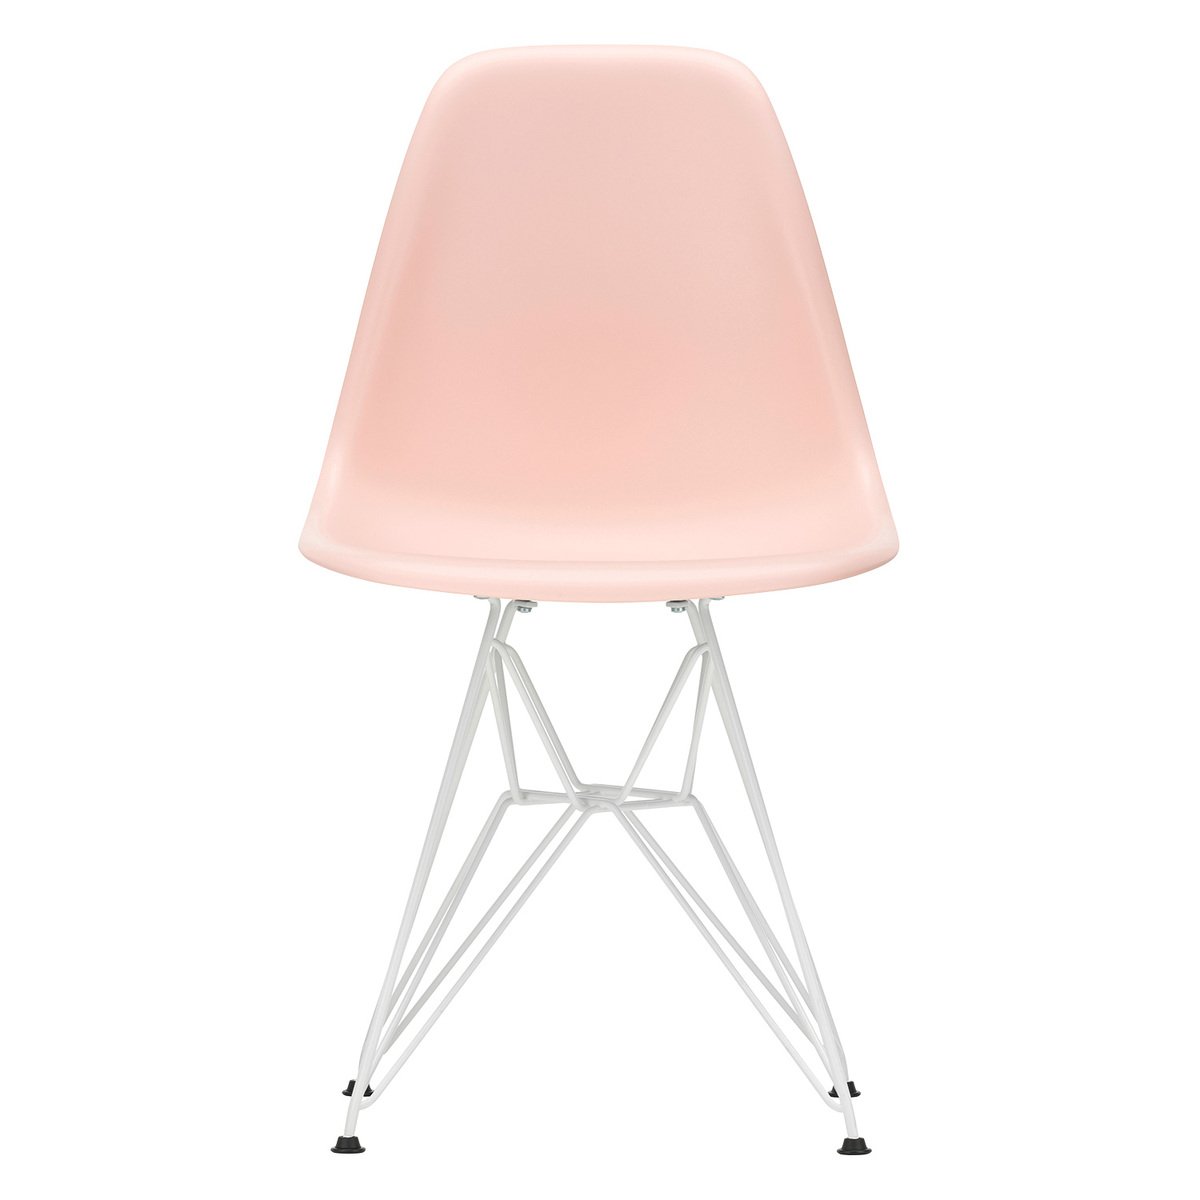 Vitra Eames DSR tuoli, pale rose - valkoinen